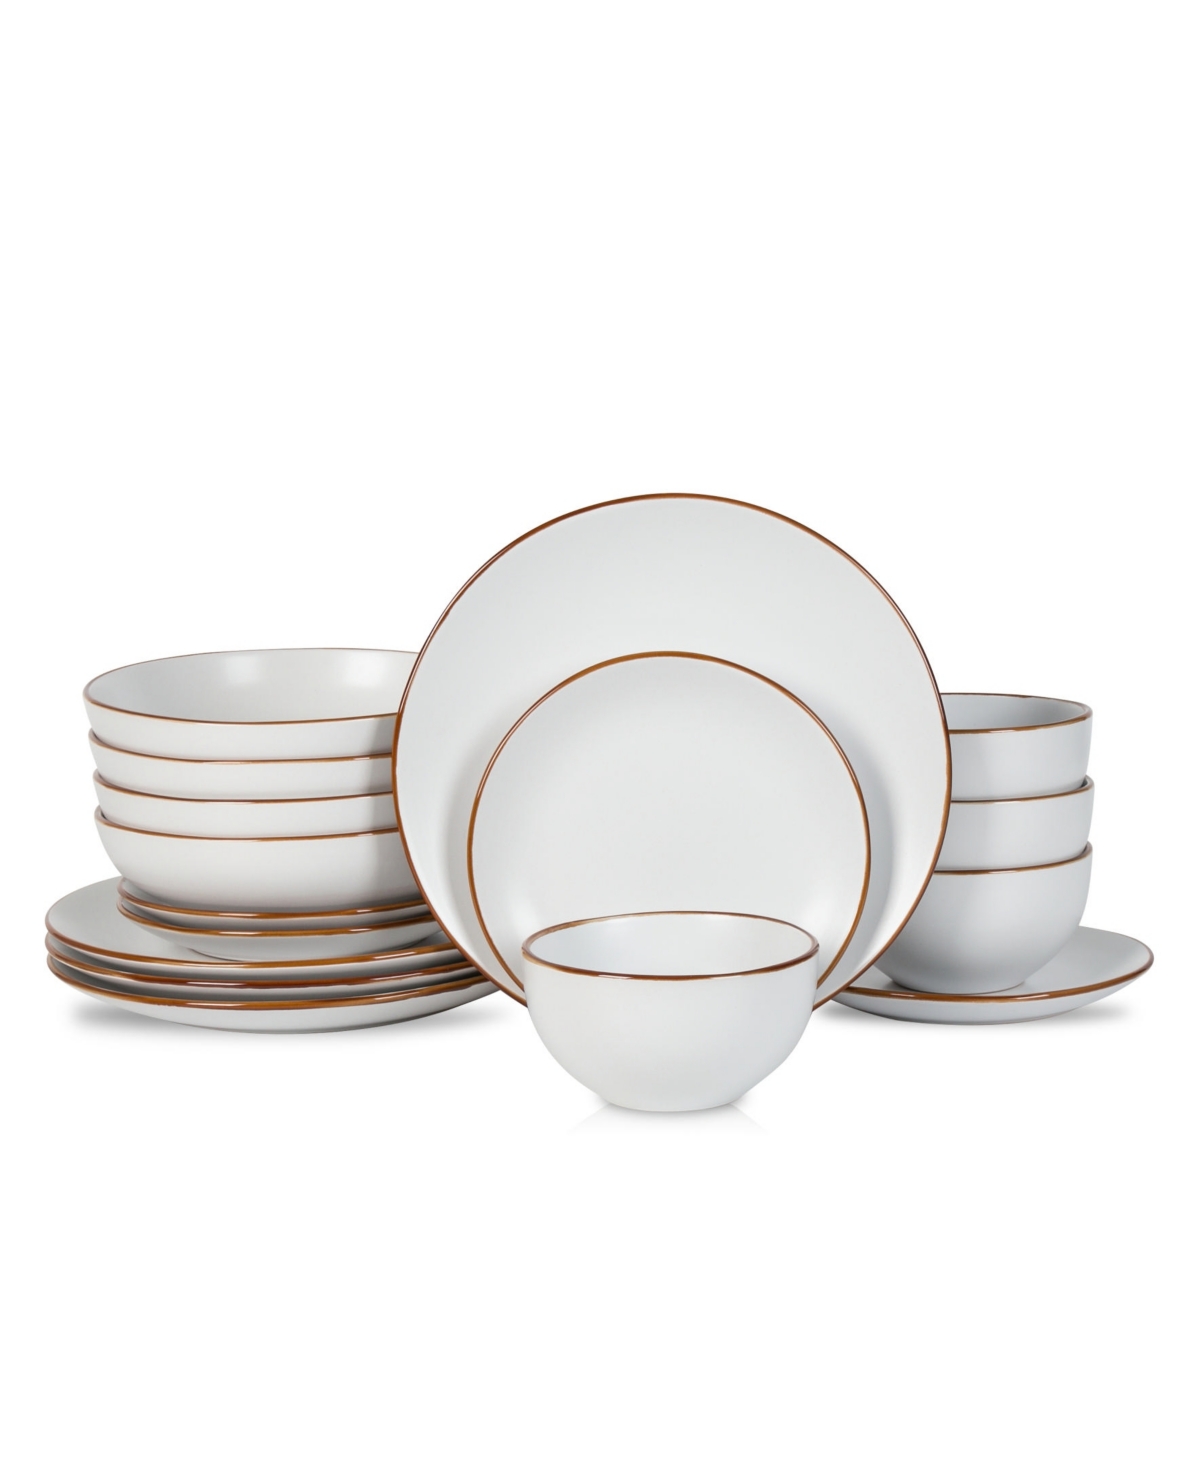 Brasa 16 Piece Dinnerware Set, Service for 4 - White